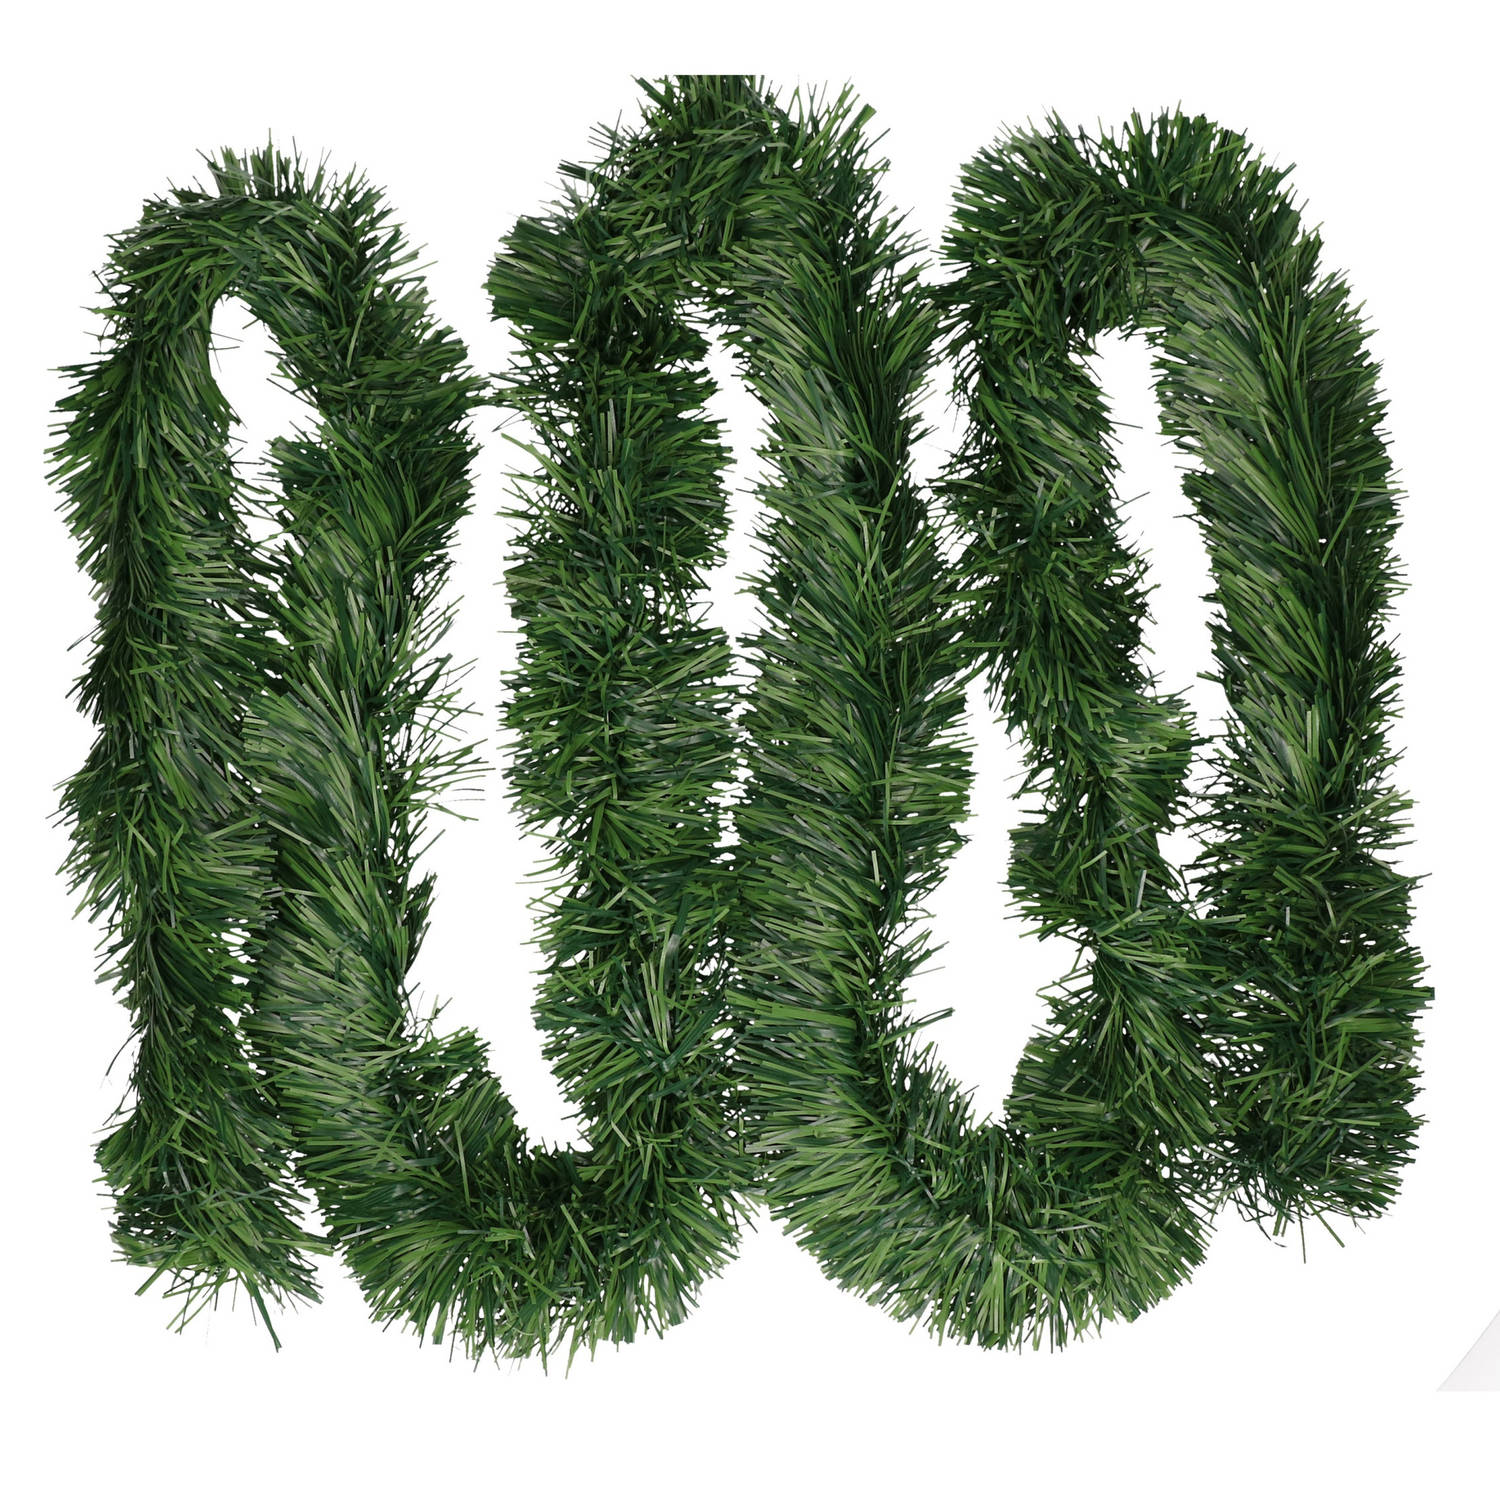 2x Groene kerst decoratie dennenslinger 270 cm - Kerstslingers